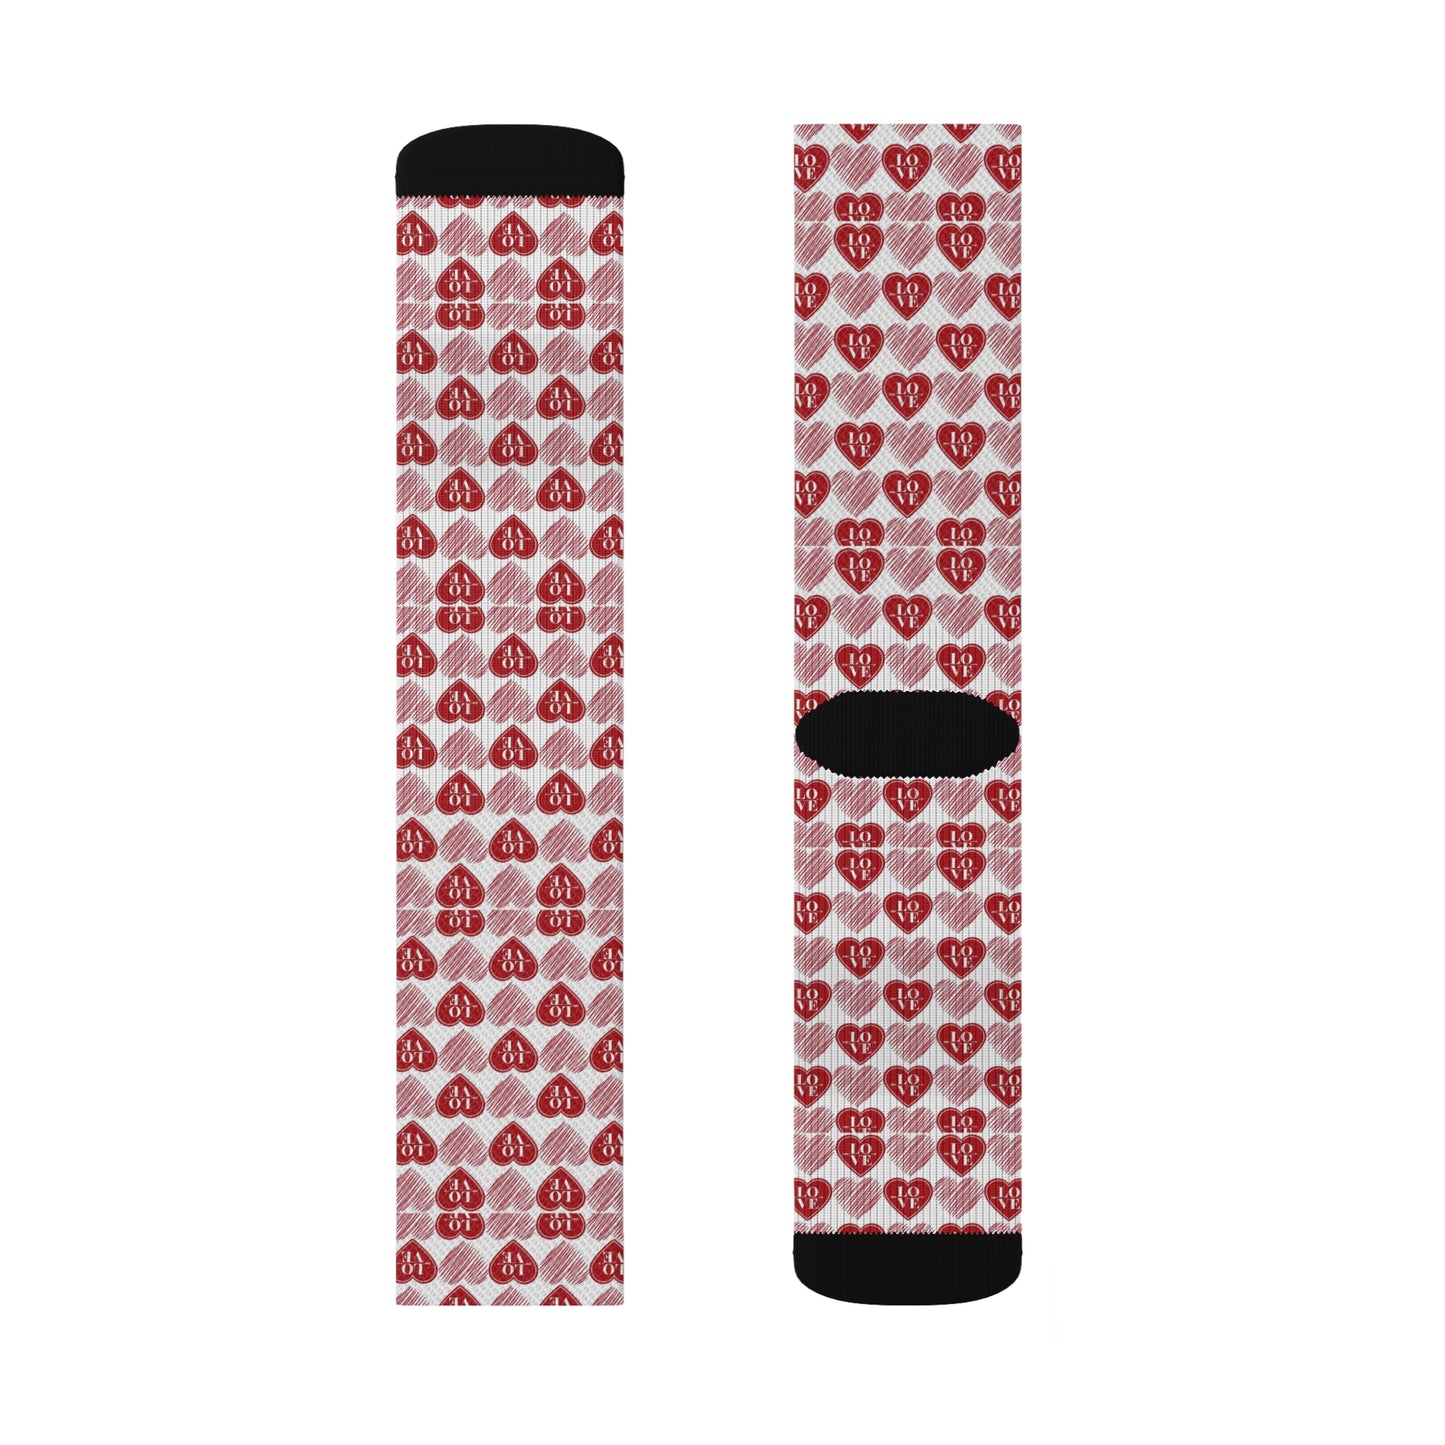 Habensens Heart Socks, Cute Fun Novelty Valentine's Socks, Sublimation Socks,